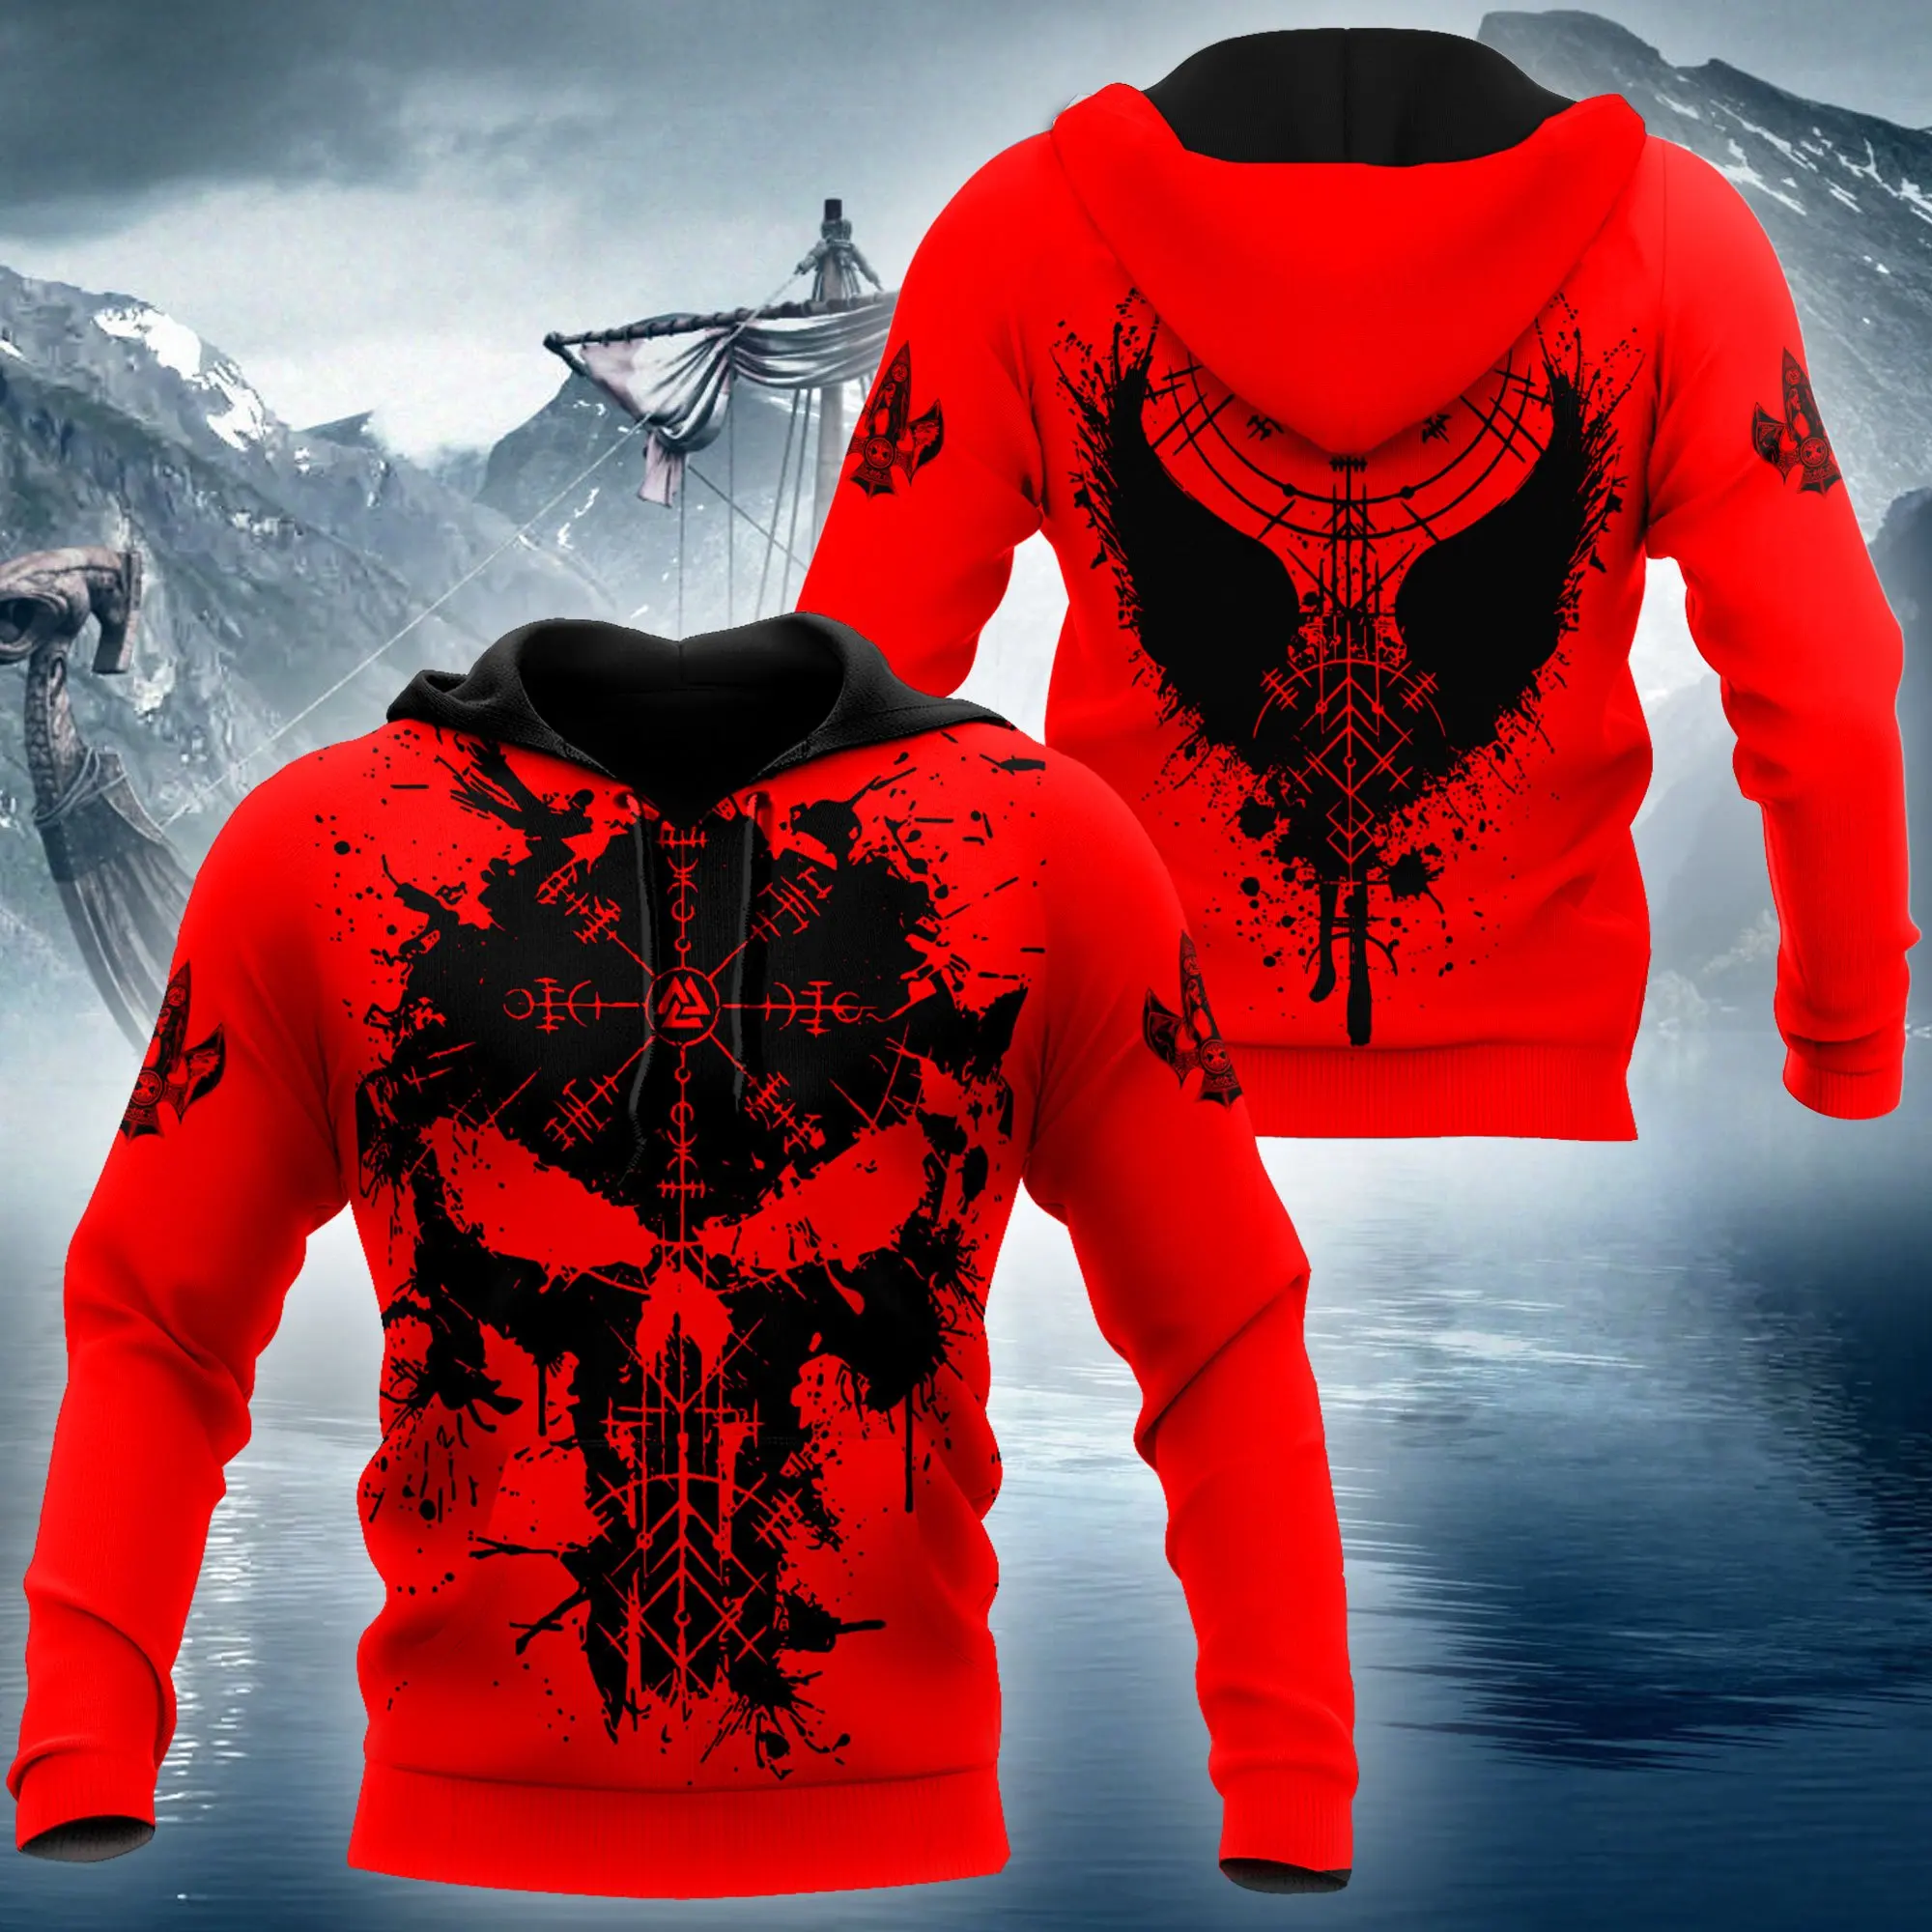 

Viking Compass Fashion Hoodies Mens Sweatshirts 2020 Male Winter Gone to Valhalla Raglan Hoodies Sportswear Male Hoody